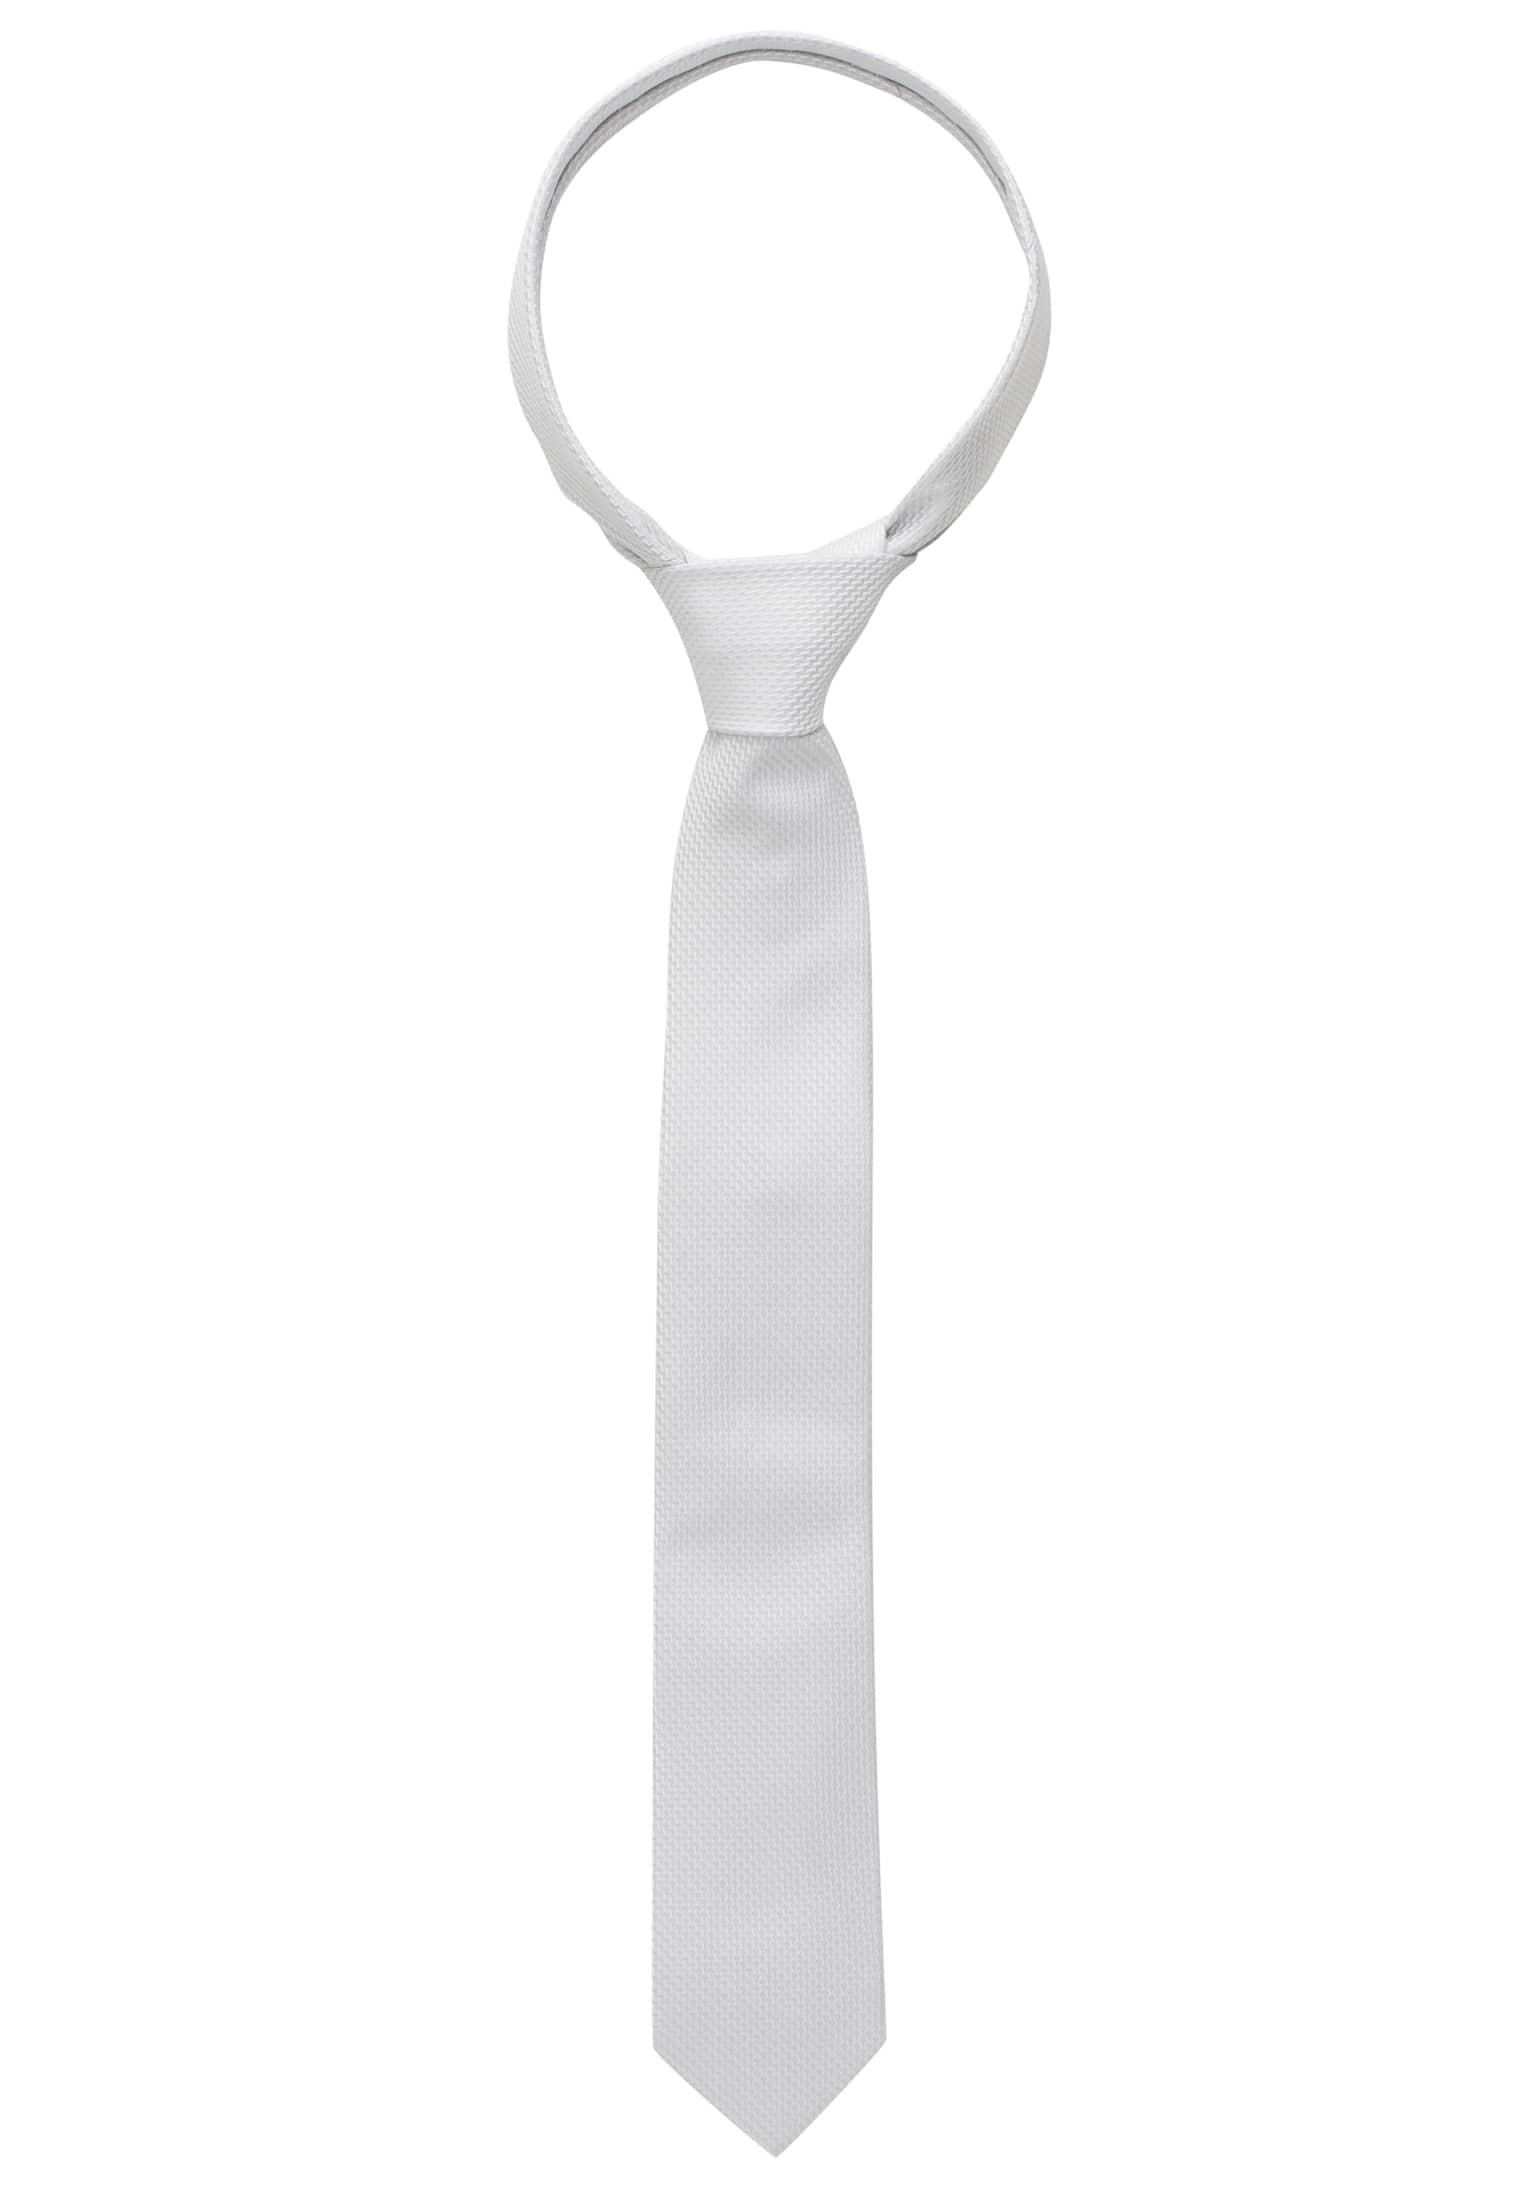 Krawatte in silber strukturiert | silber | 142 | 1AC01872-03-11-142